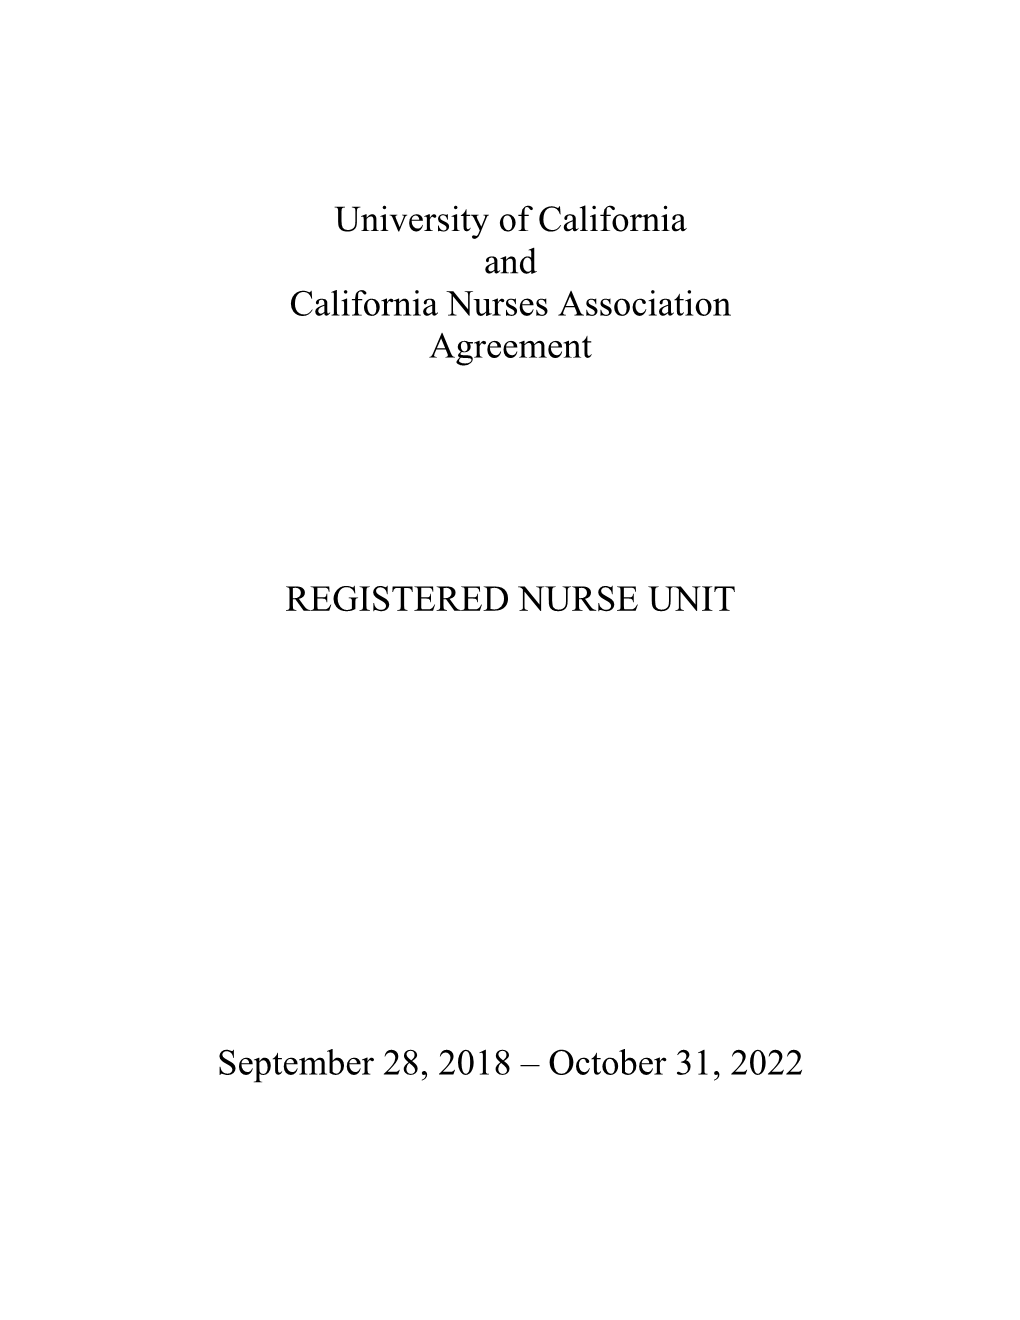 University of California and California Nurses Association Agreement